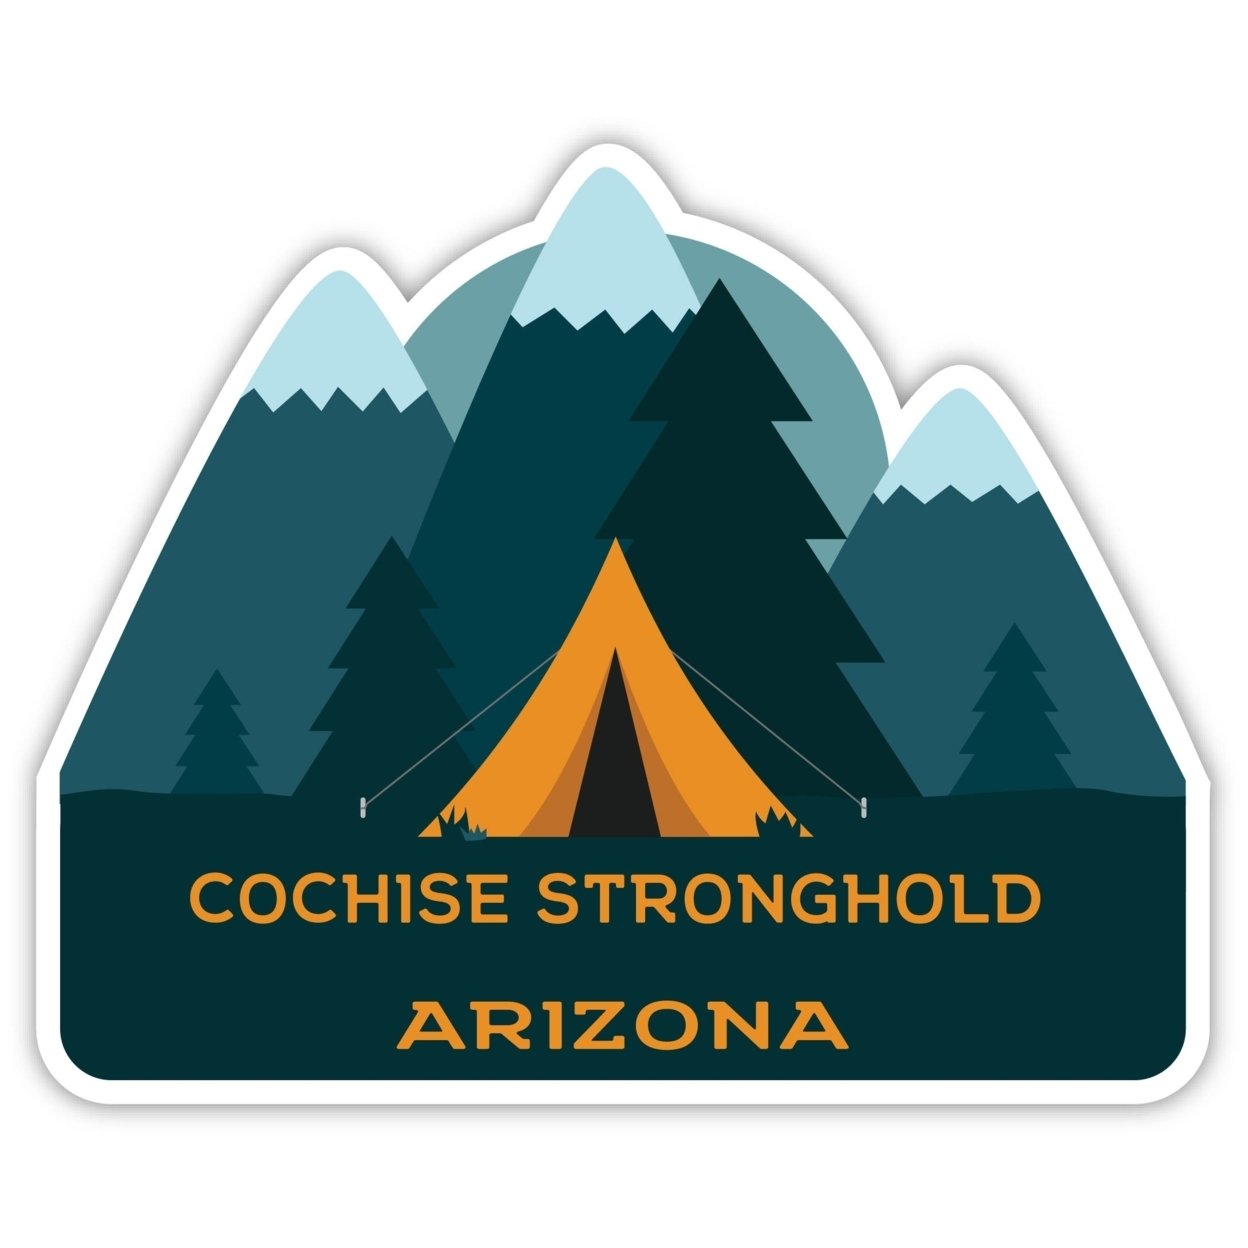 Cochise Stronghold Arizona Souvenir Decorative Stickers (Choose Theme And Size) - Single Unit, 4-Inch, Tent